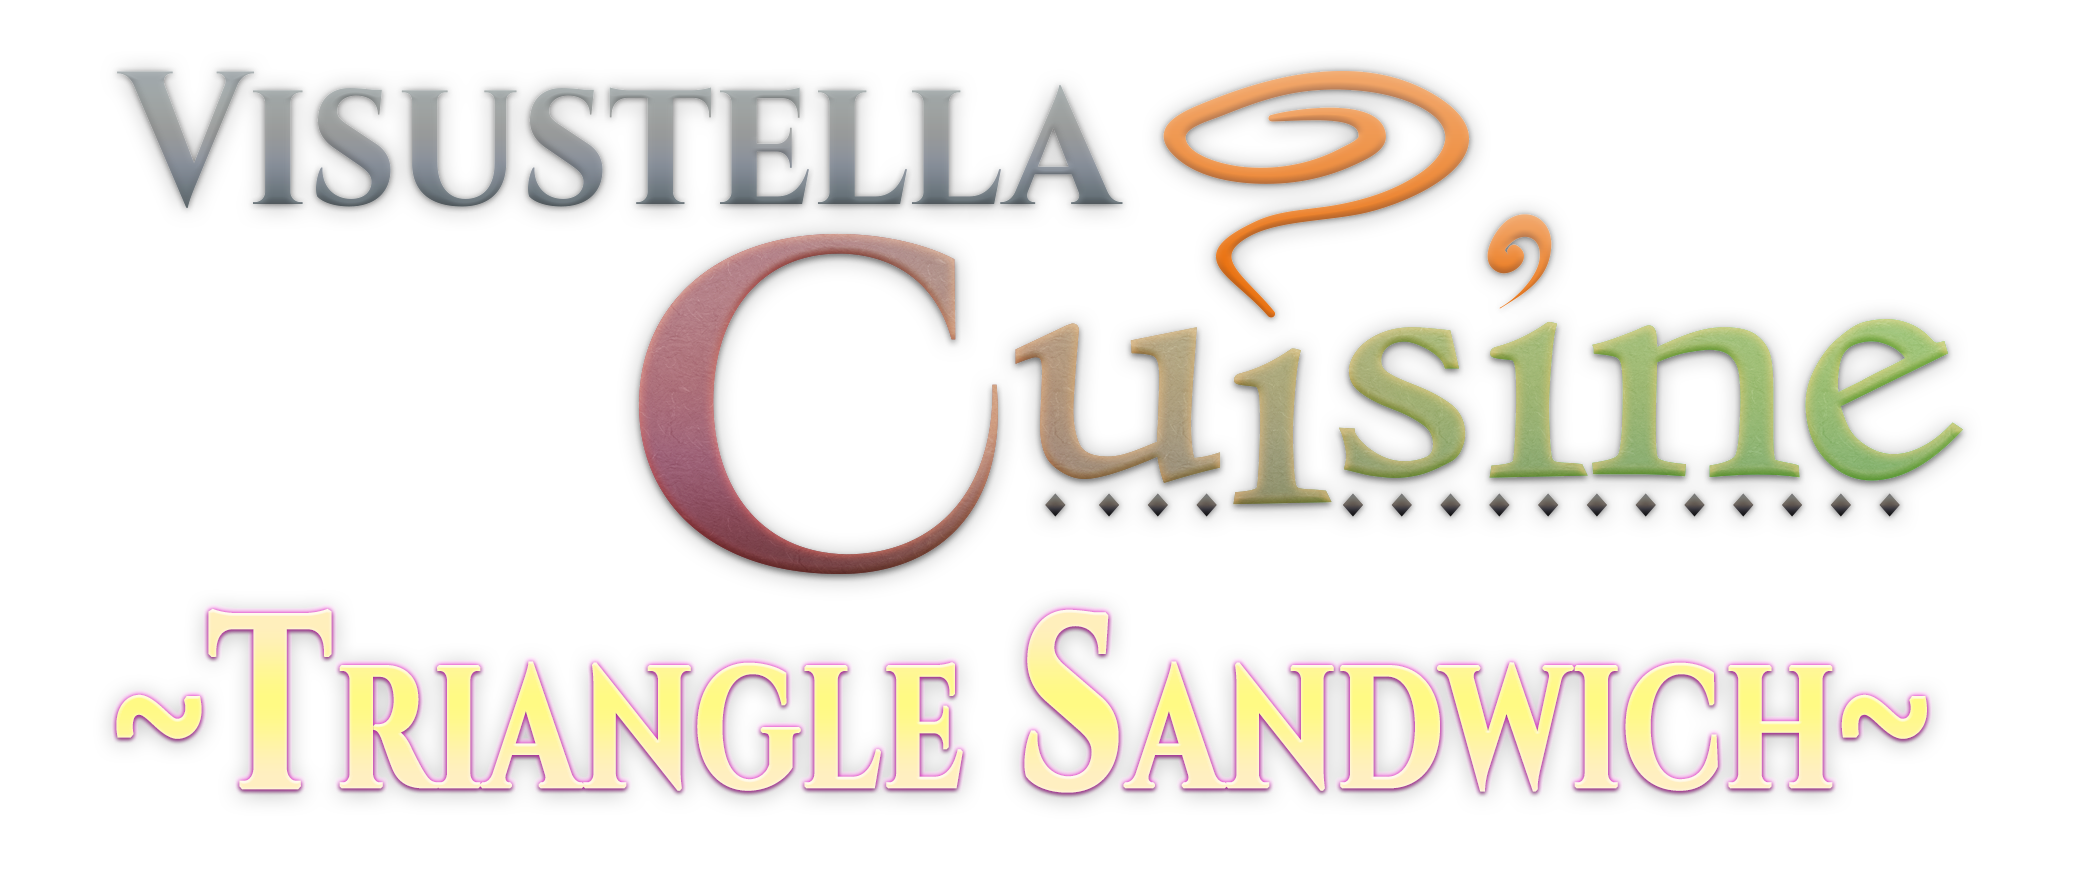 VisuStella Cuisine: Triangle Sandwich